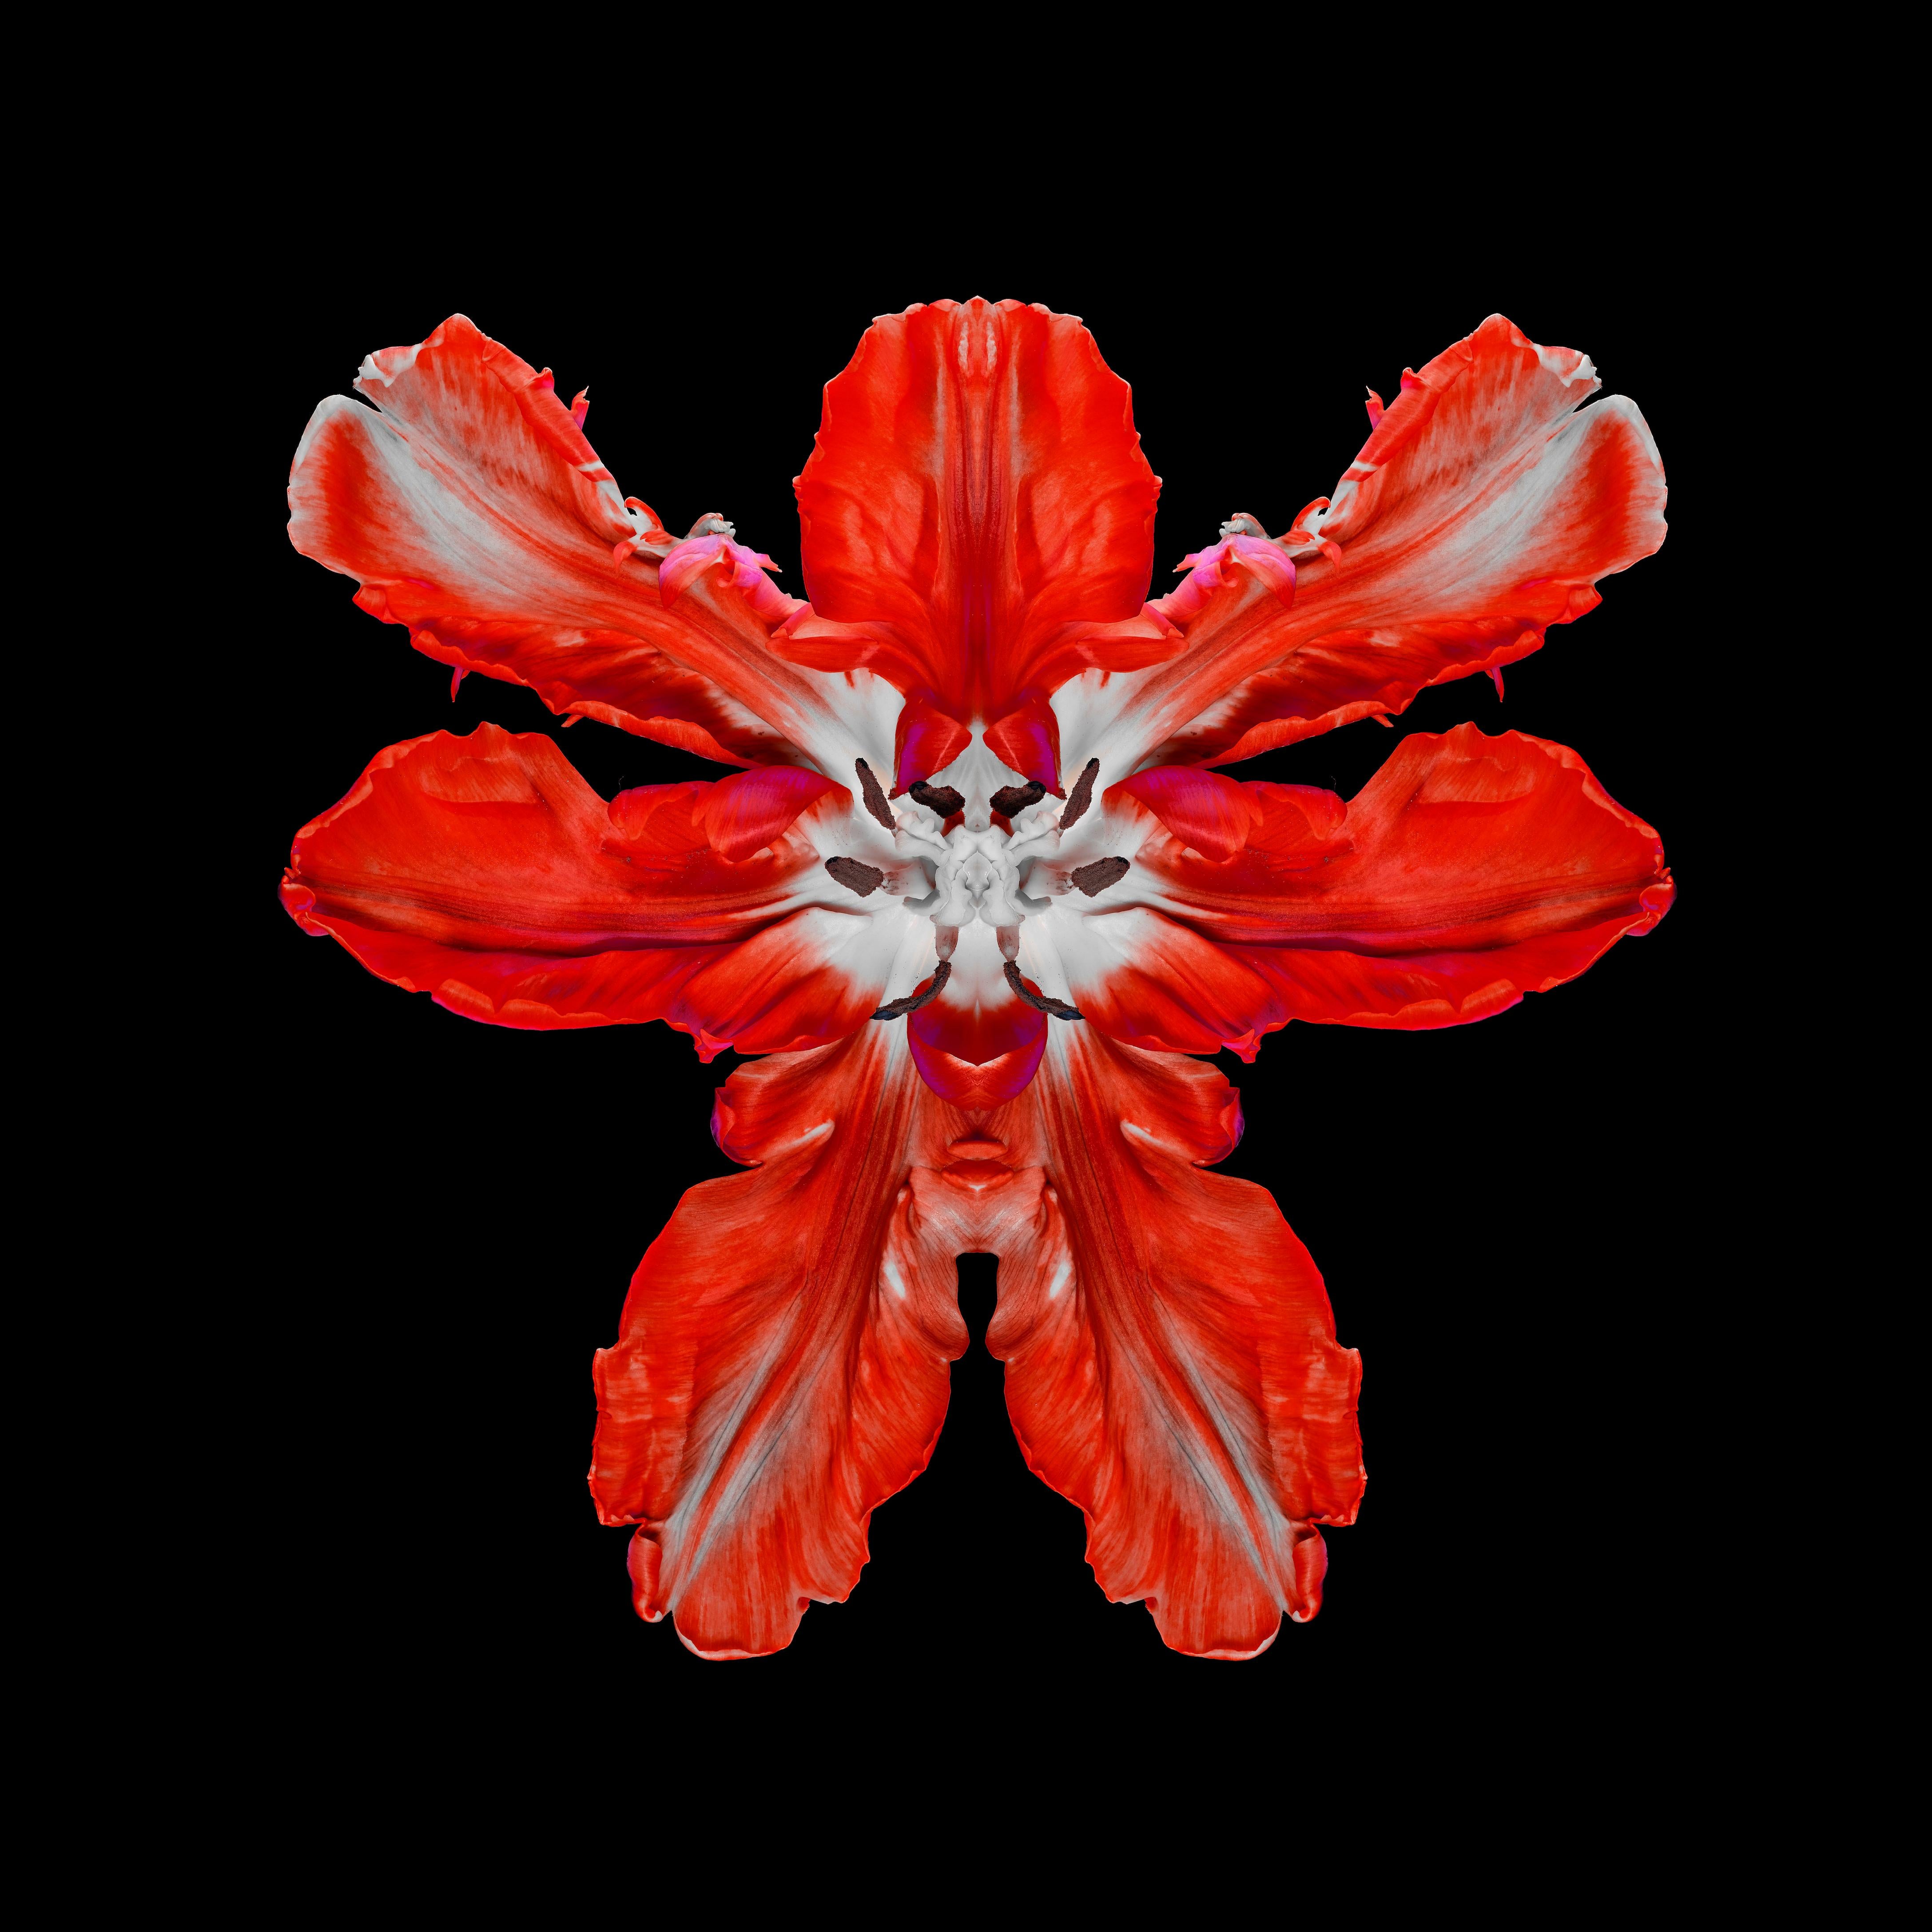 Jeff Robb Color Photograph – "Embryonale Tulpe 1" 3-D-Bewegung Lenticular rote Blume Foto gerahmt, zeitgenössische